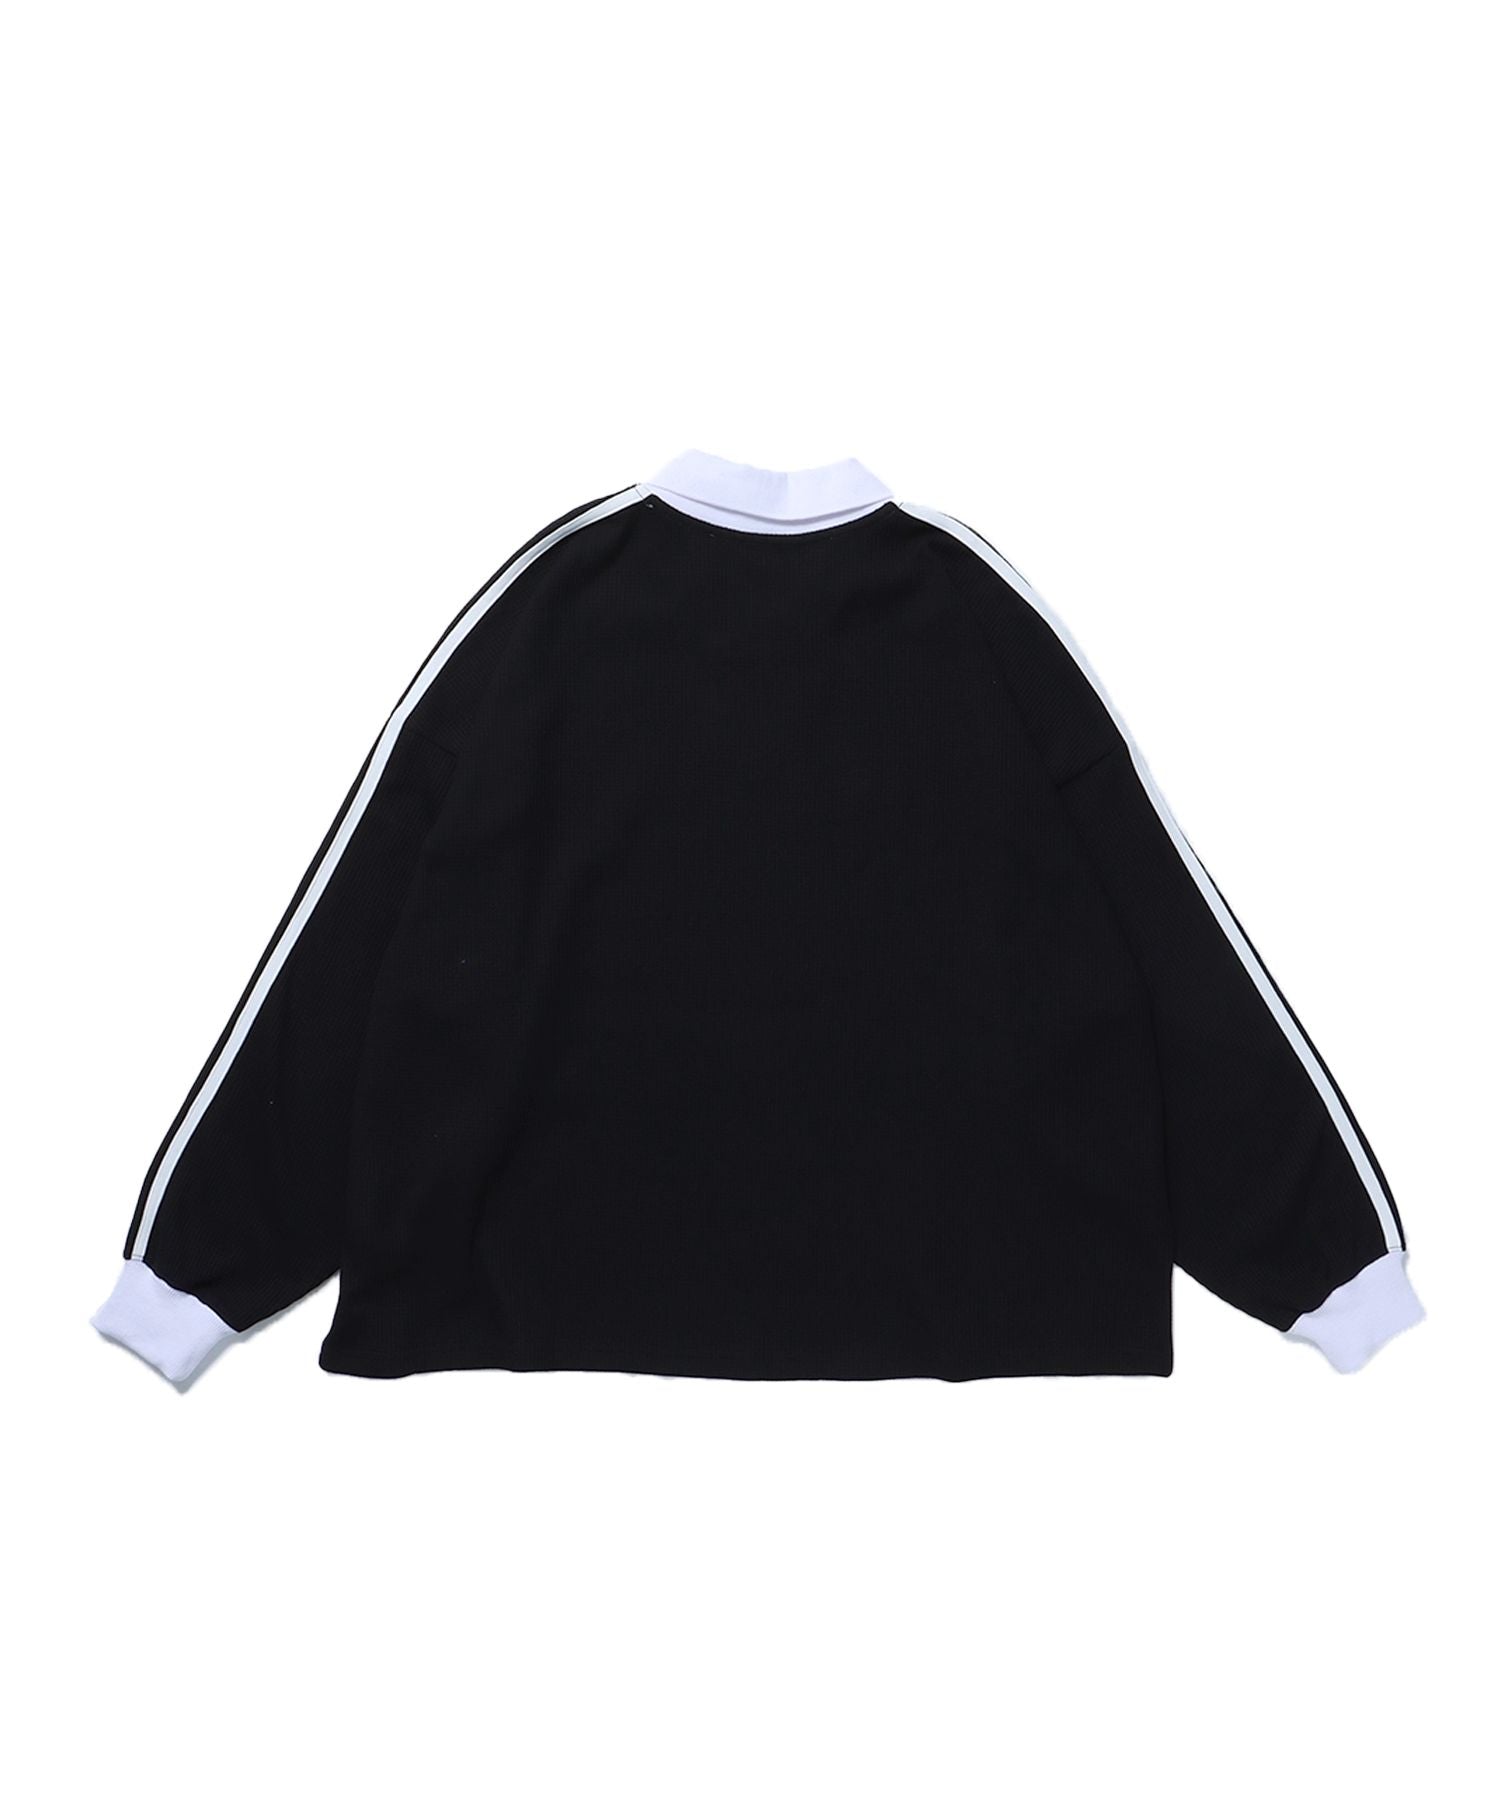 【SEQUENZ】 配色 オーバーサイズ ゲームシャツ サイドライン ブラック